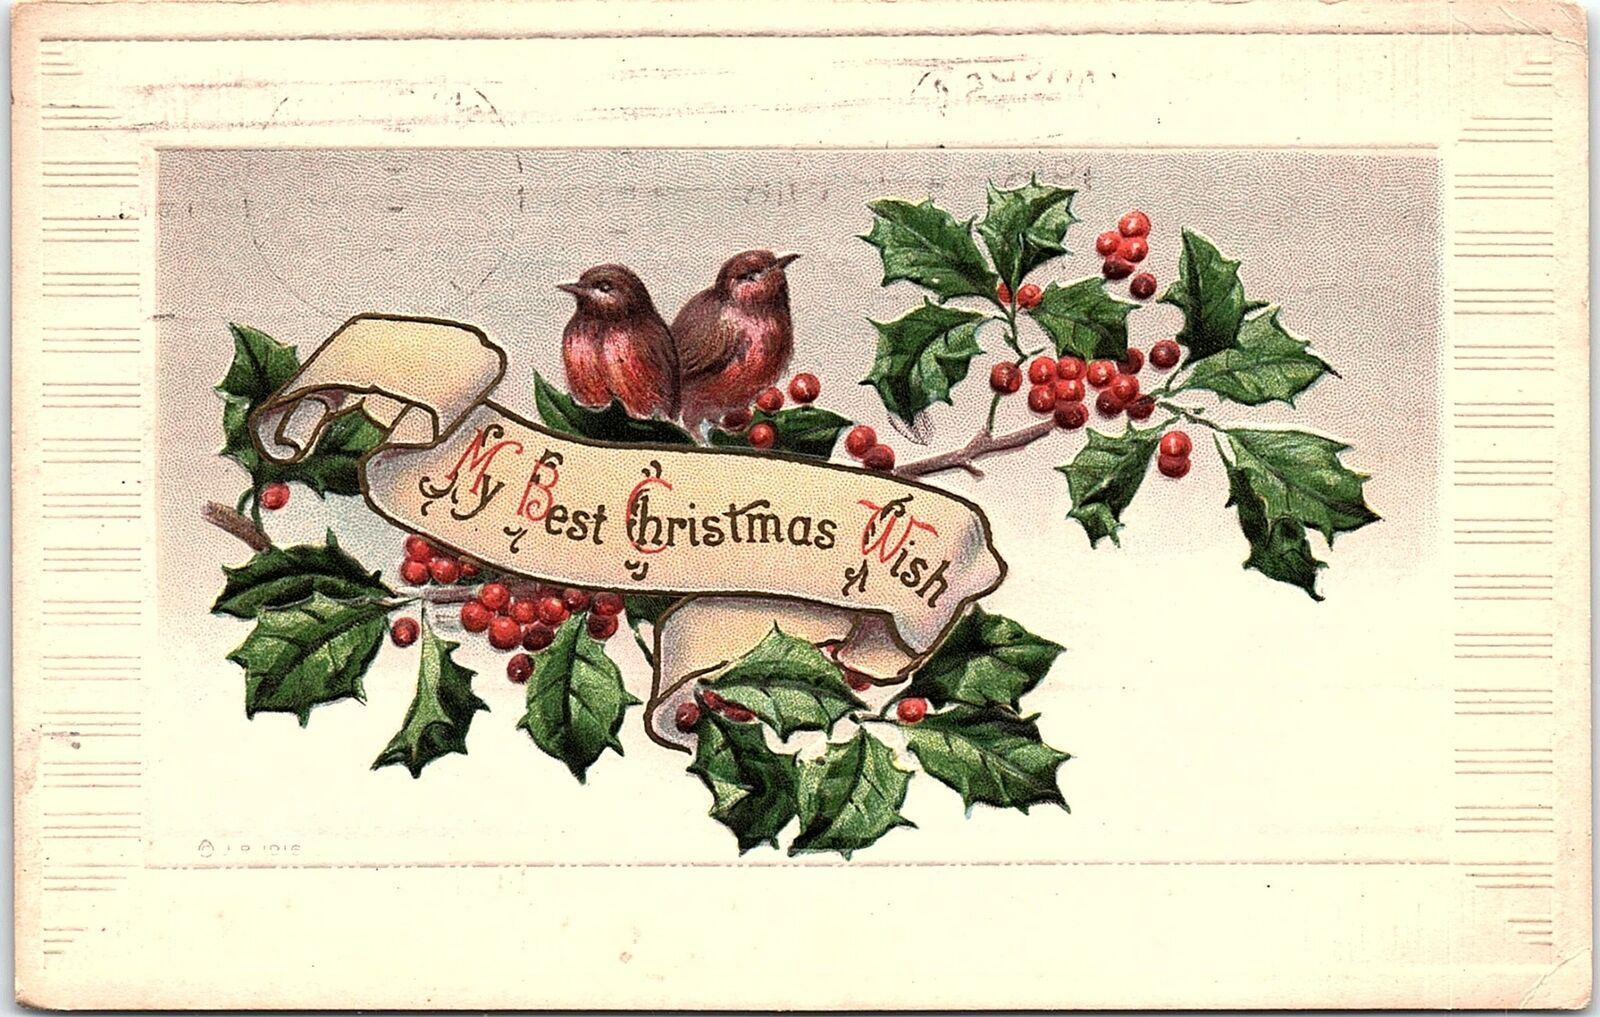 c1915 BEST CHRISTMAS WISH BIRDS BERRIES MARQUETTE NE EMBOSSED POSTCARD 39-256